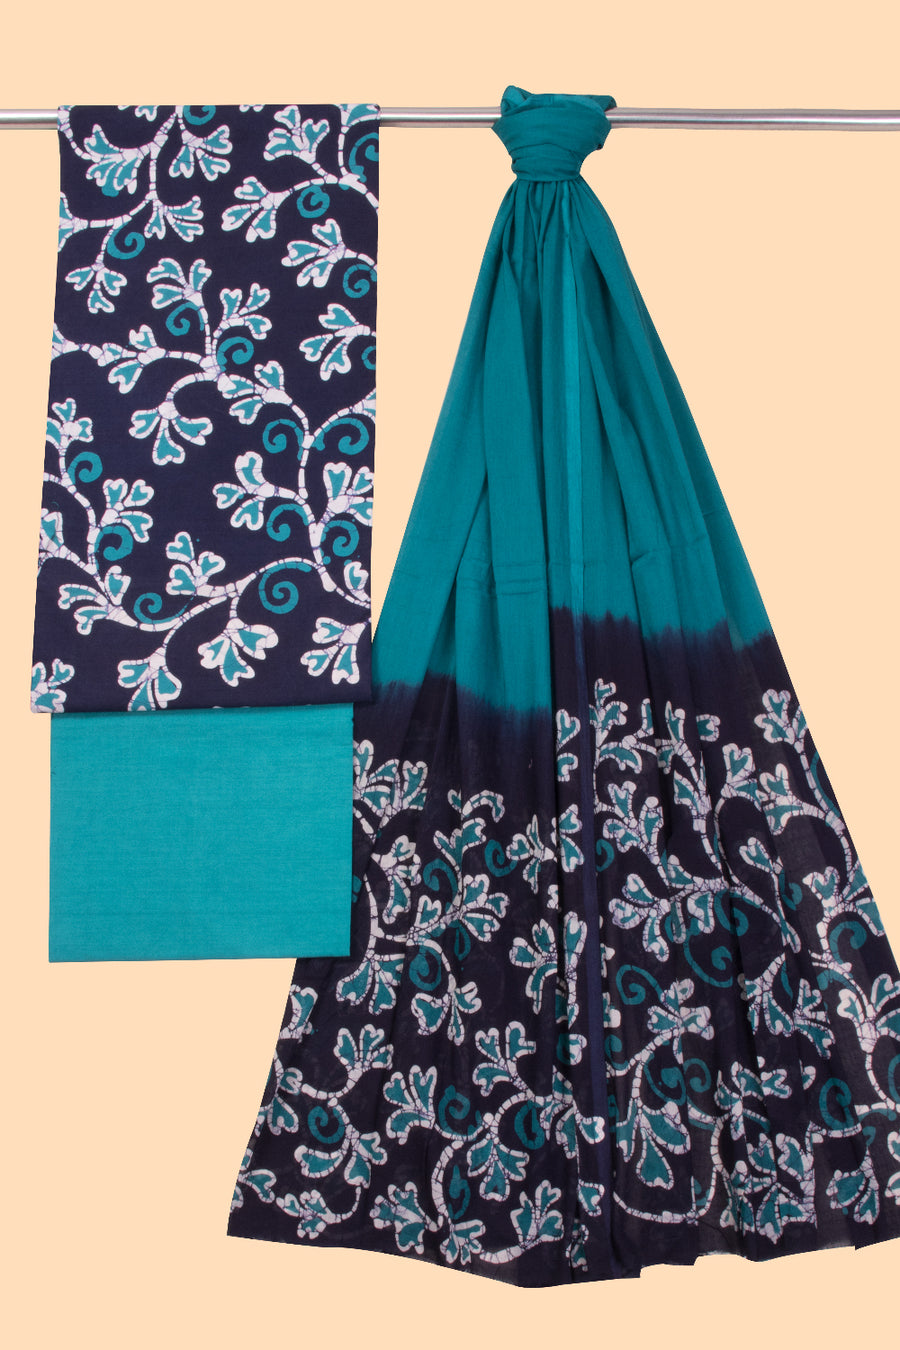 Indigo Blue Batik Cotton 3-Piece Salwar Suit Material-Avishya